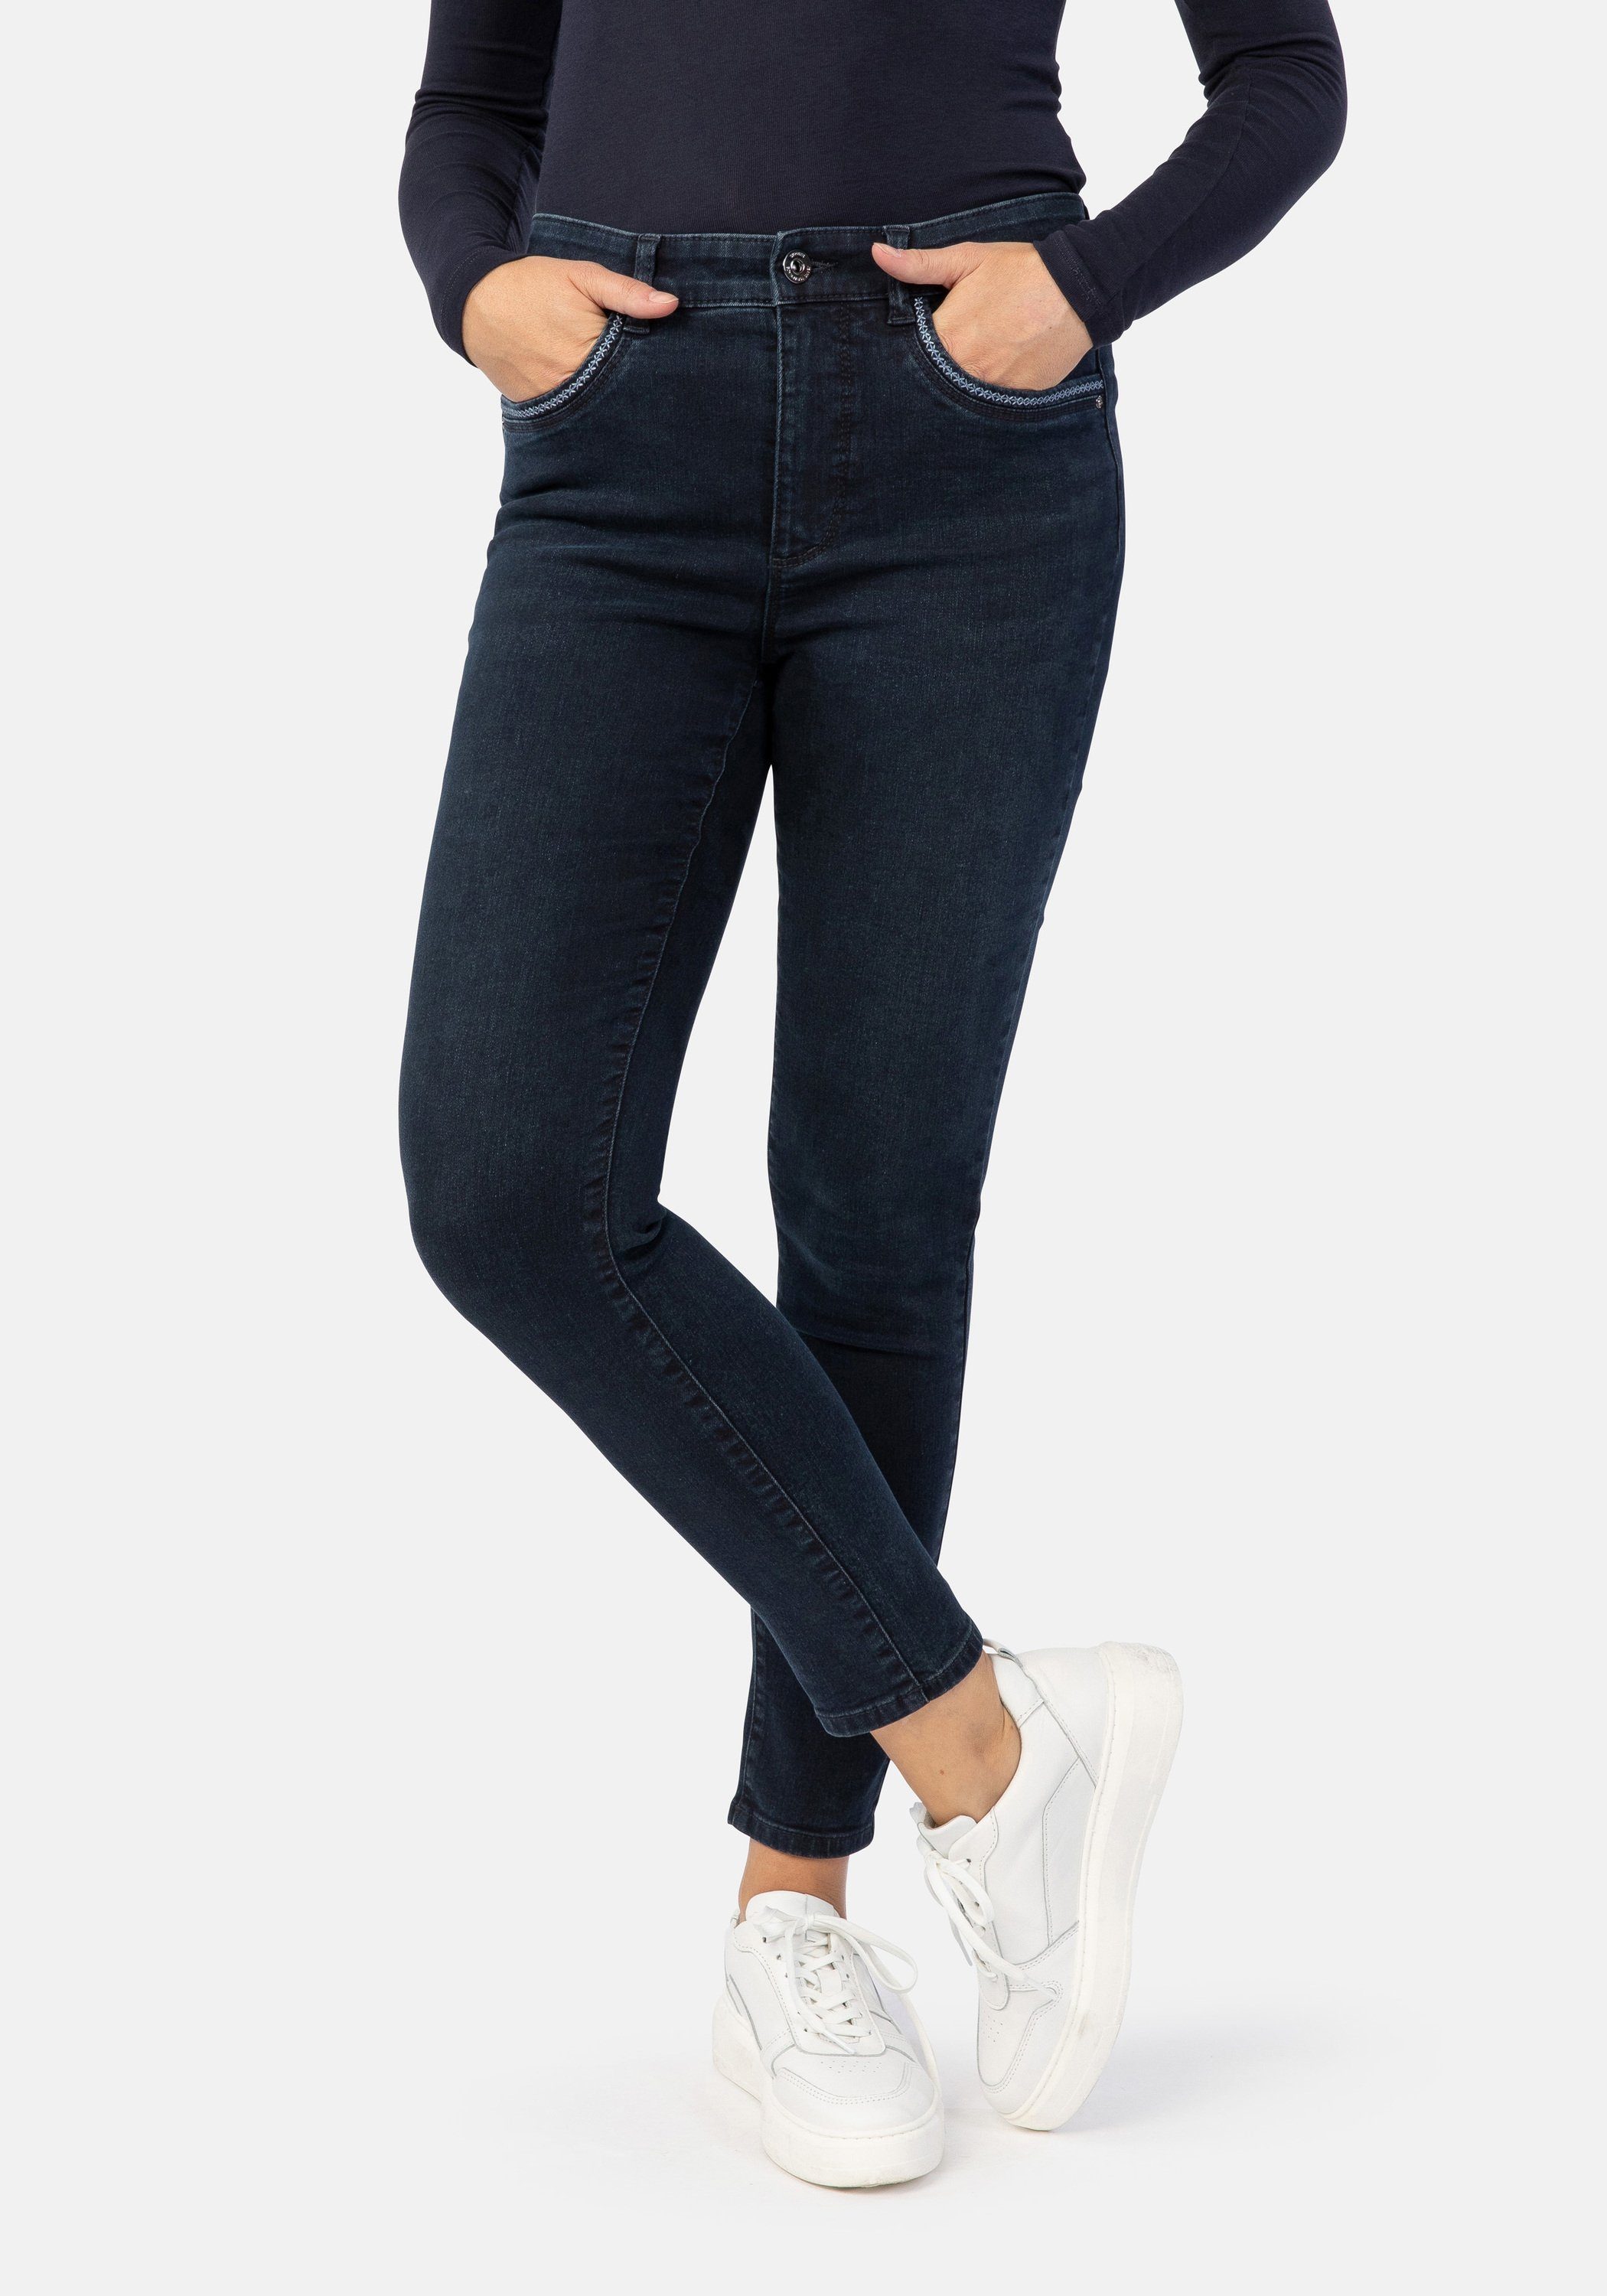 STOOKER Move 5-Pocket-Jeans Fit WOMEN Rio Skinny indigo Fexxi Denim authentic wash